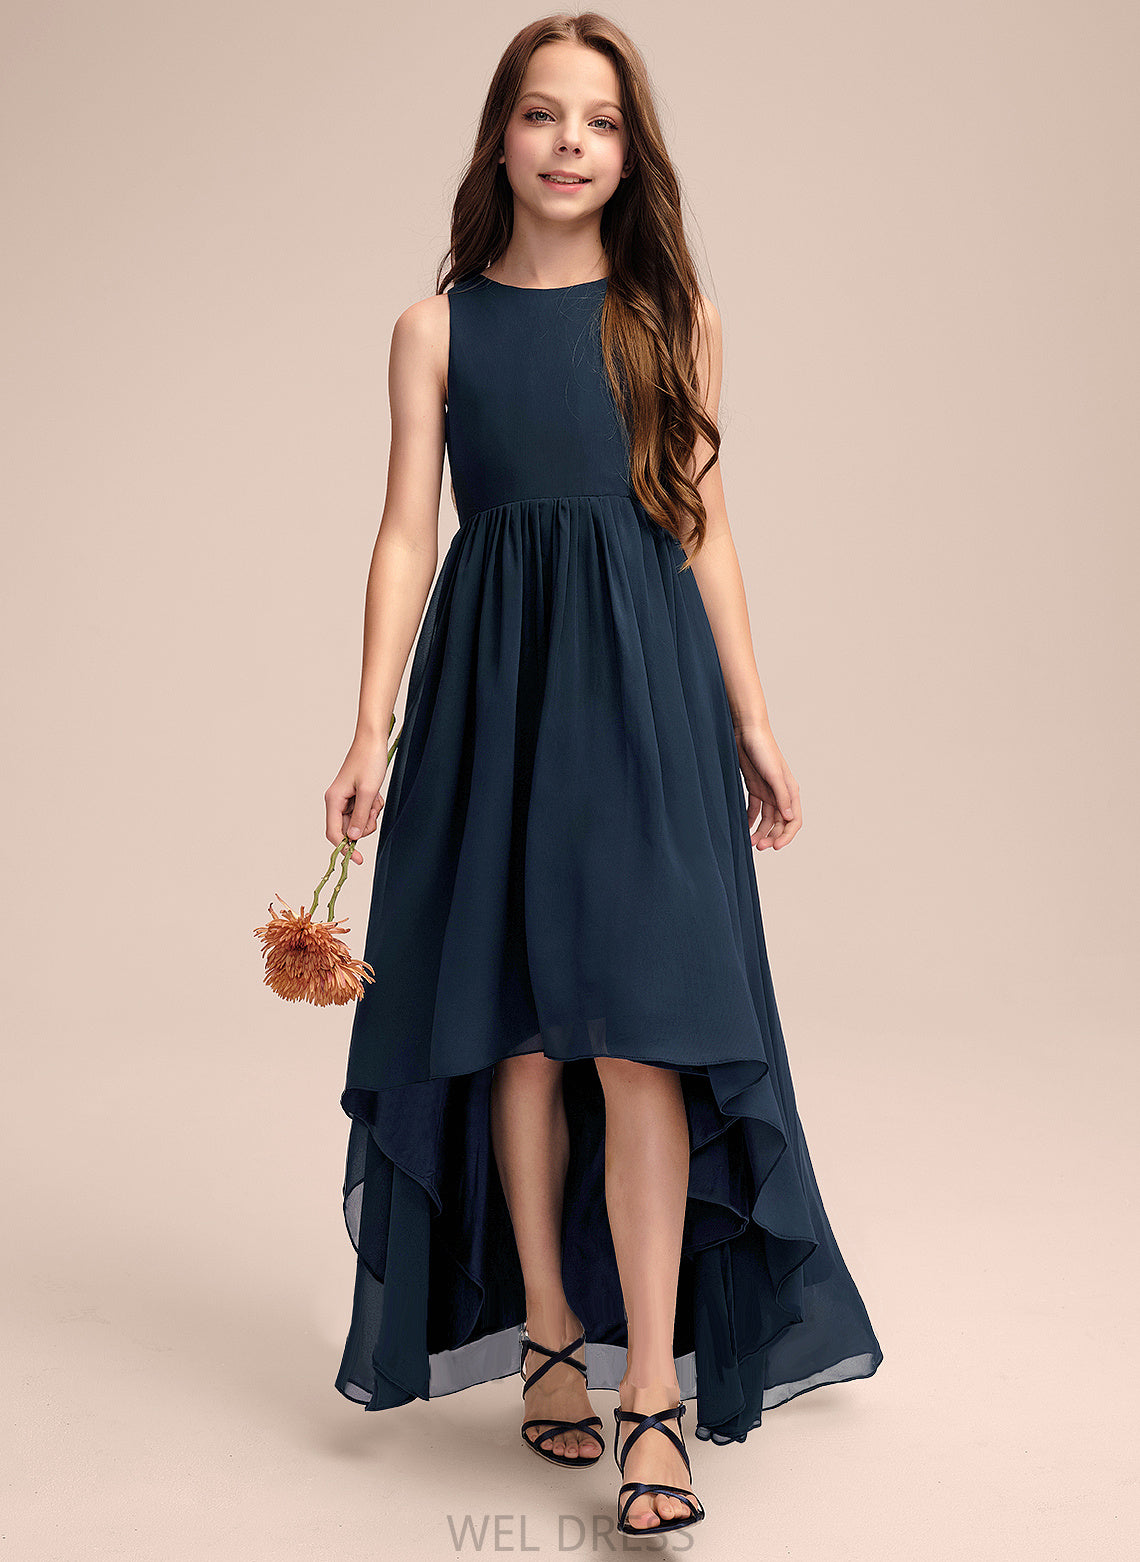 Scoop Sydney Chiffon Neck A-Line Asymmetrical Junior Bridesmaid Dresses